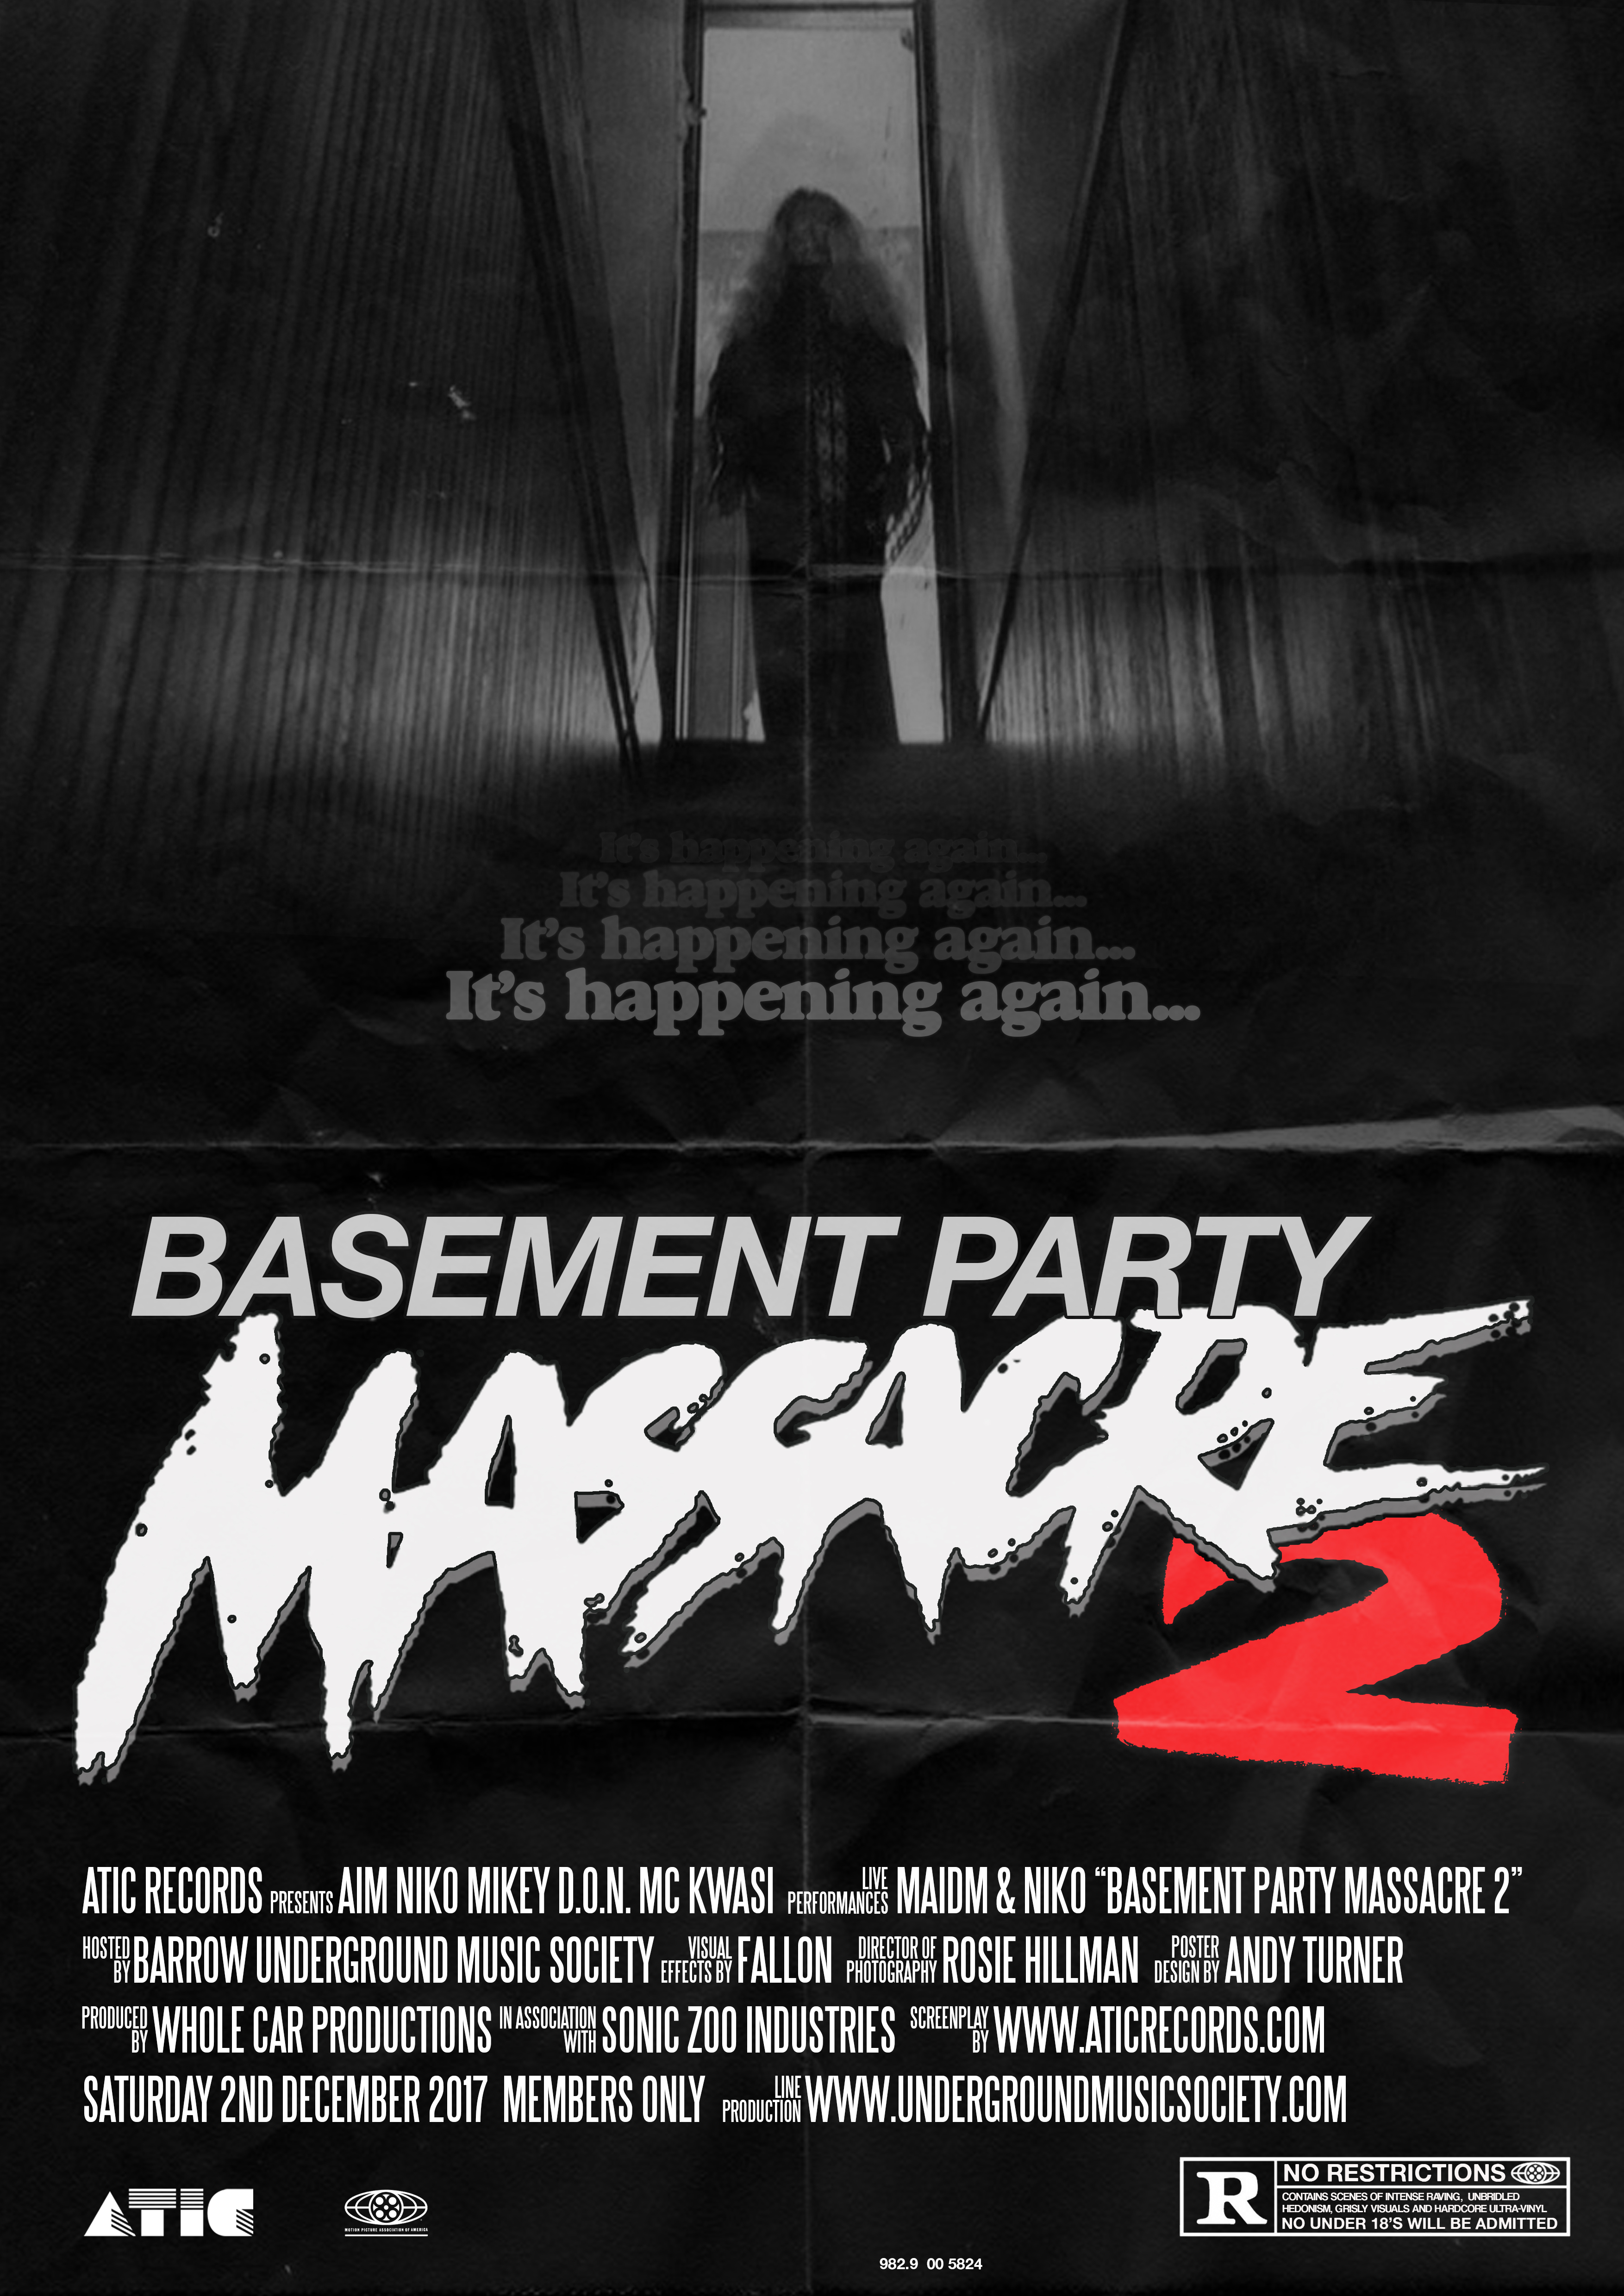 'BASEMENT PARTY MASSACRE 2' STARRING AIM, NIKO, MIKEY D.O.N. & MC KWASI